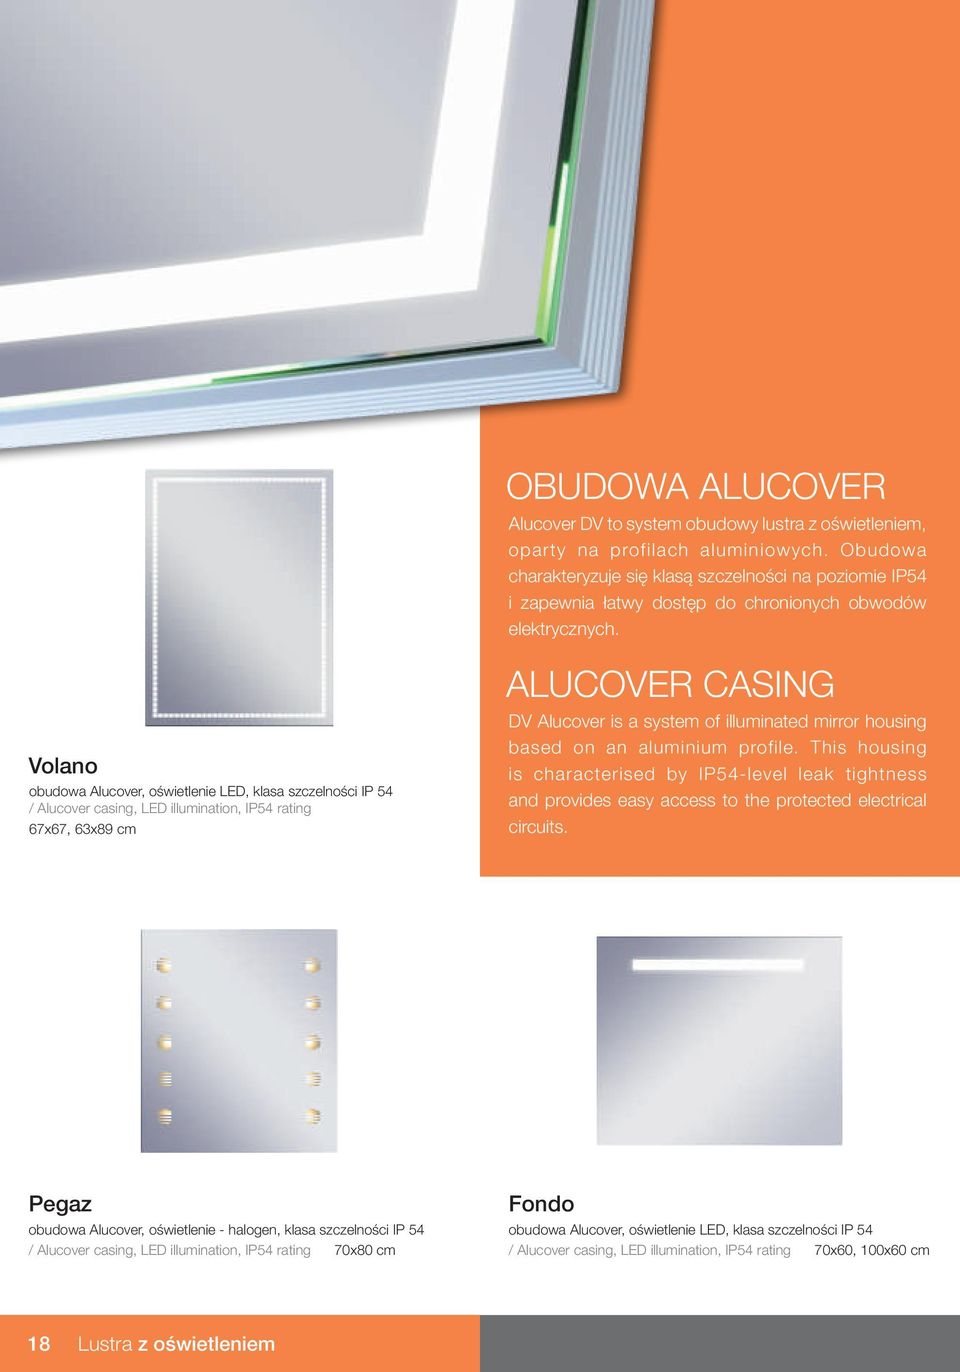 Volano obudowa Alucover, oœwietlenie LED, klasa szczelnoœci IP 54 / Alucover casing, LED illumination, IP54 rating 67x67, 63x89 cm ALUCOVER CASING DV Alucover is a system of illuminated mirror